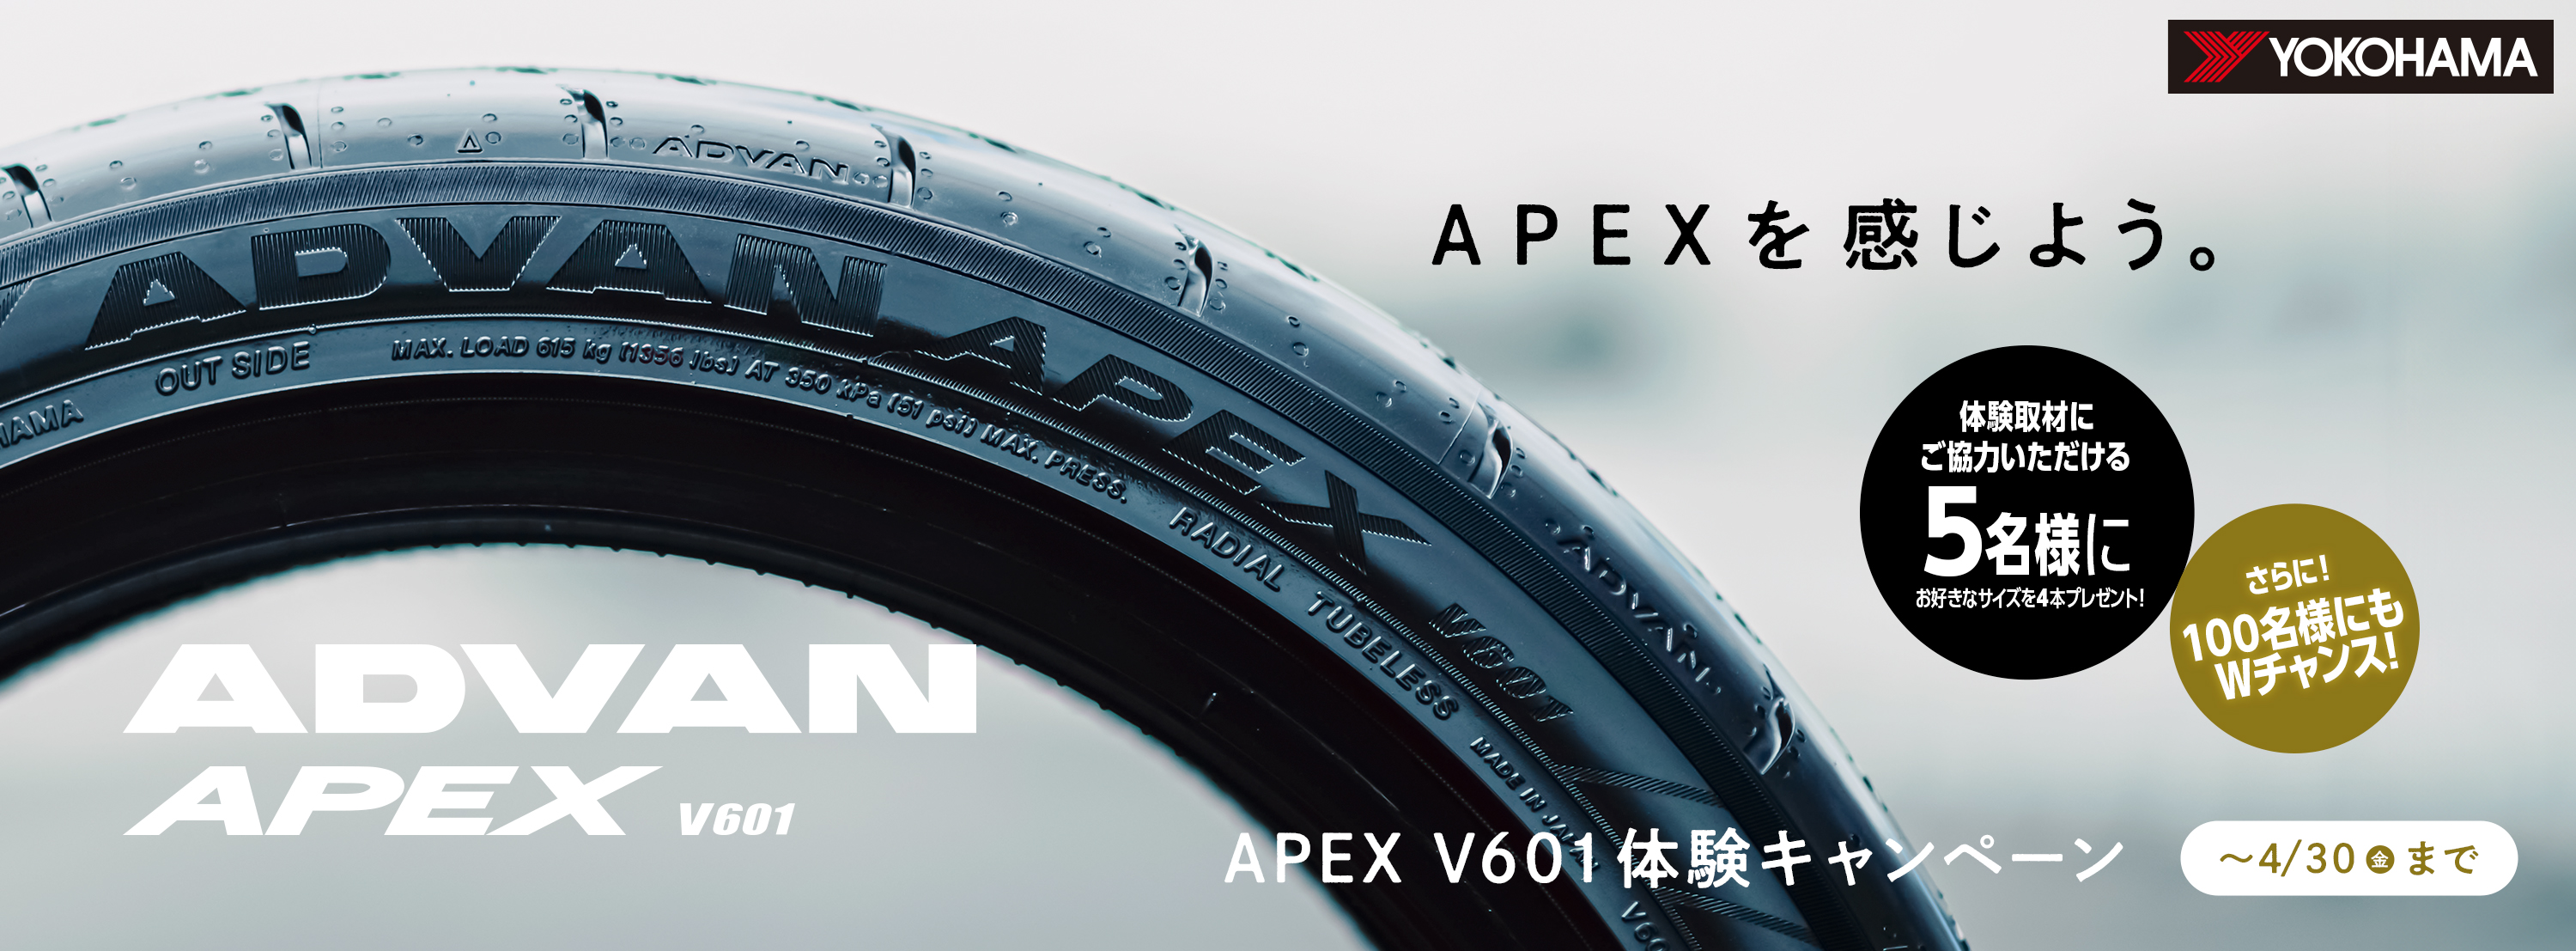 ADVAN APEX V601体験キャンペーン